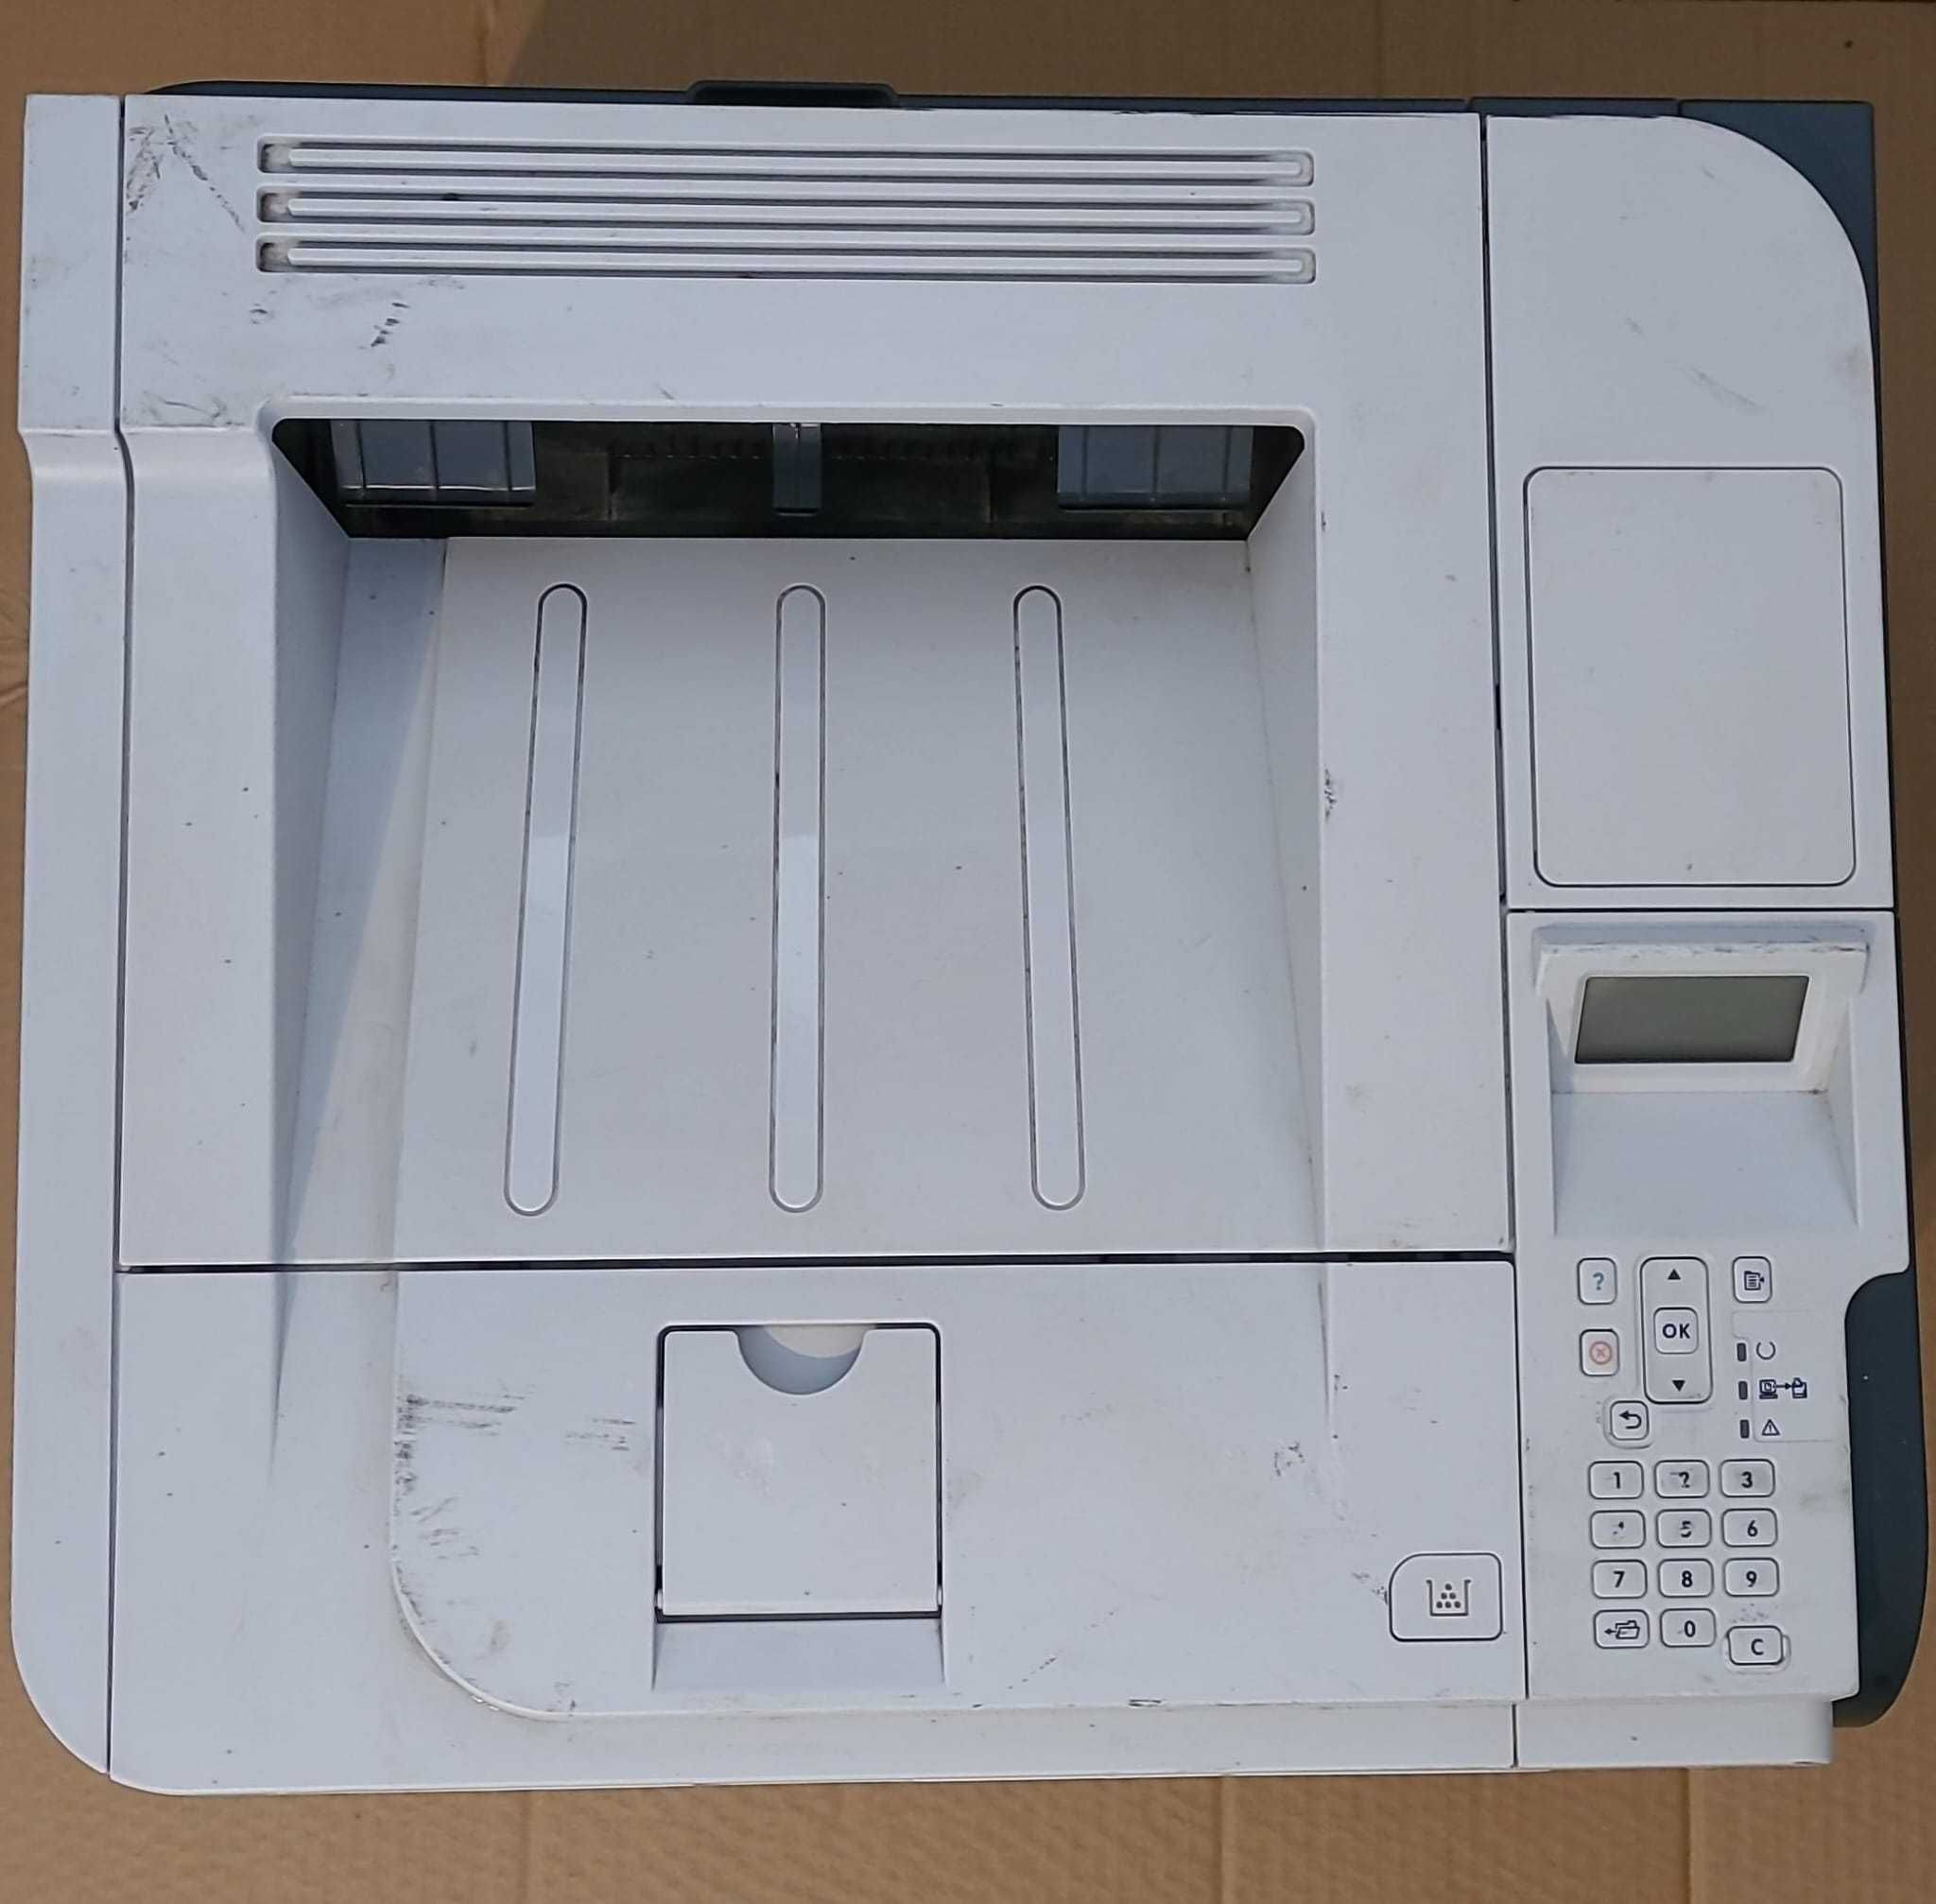 Imprimantă HP LaserJet p3015